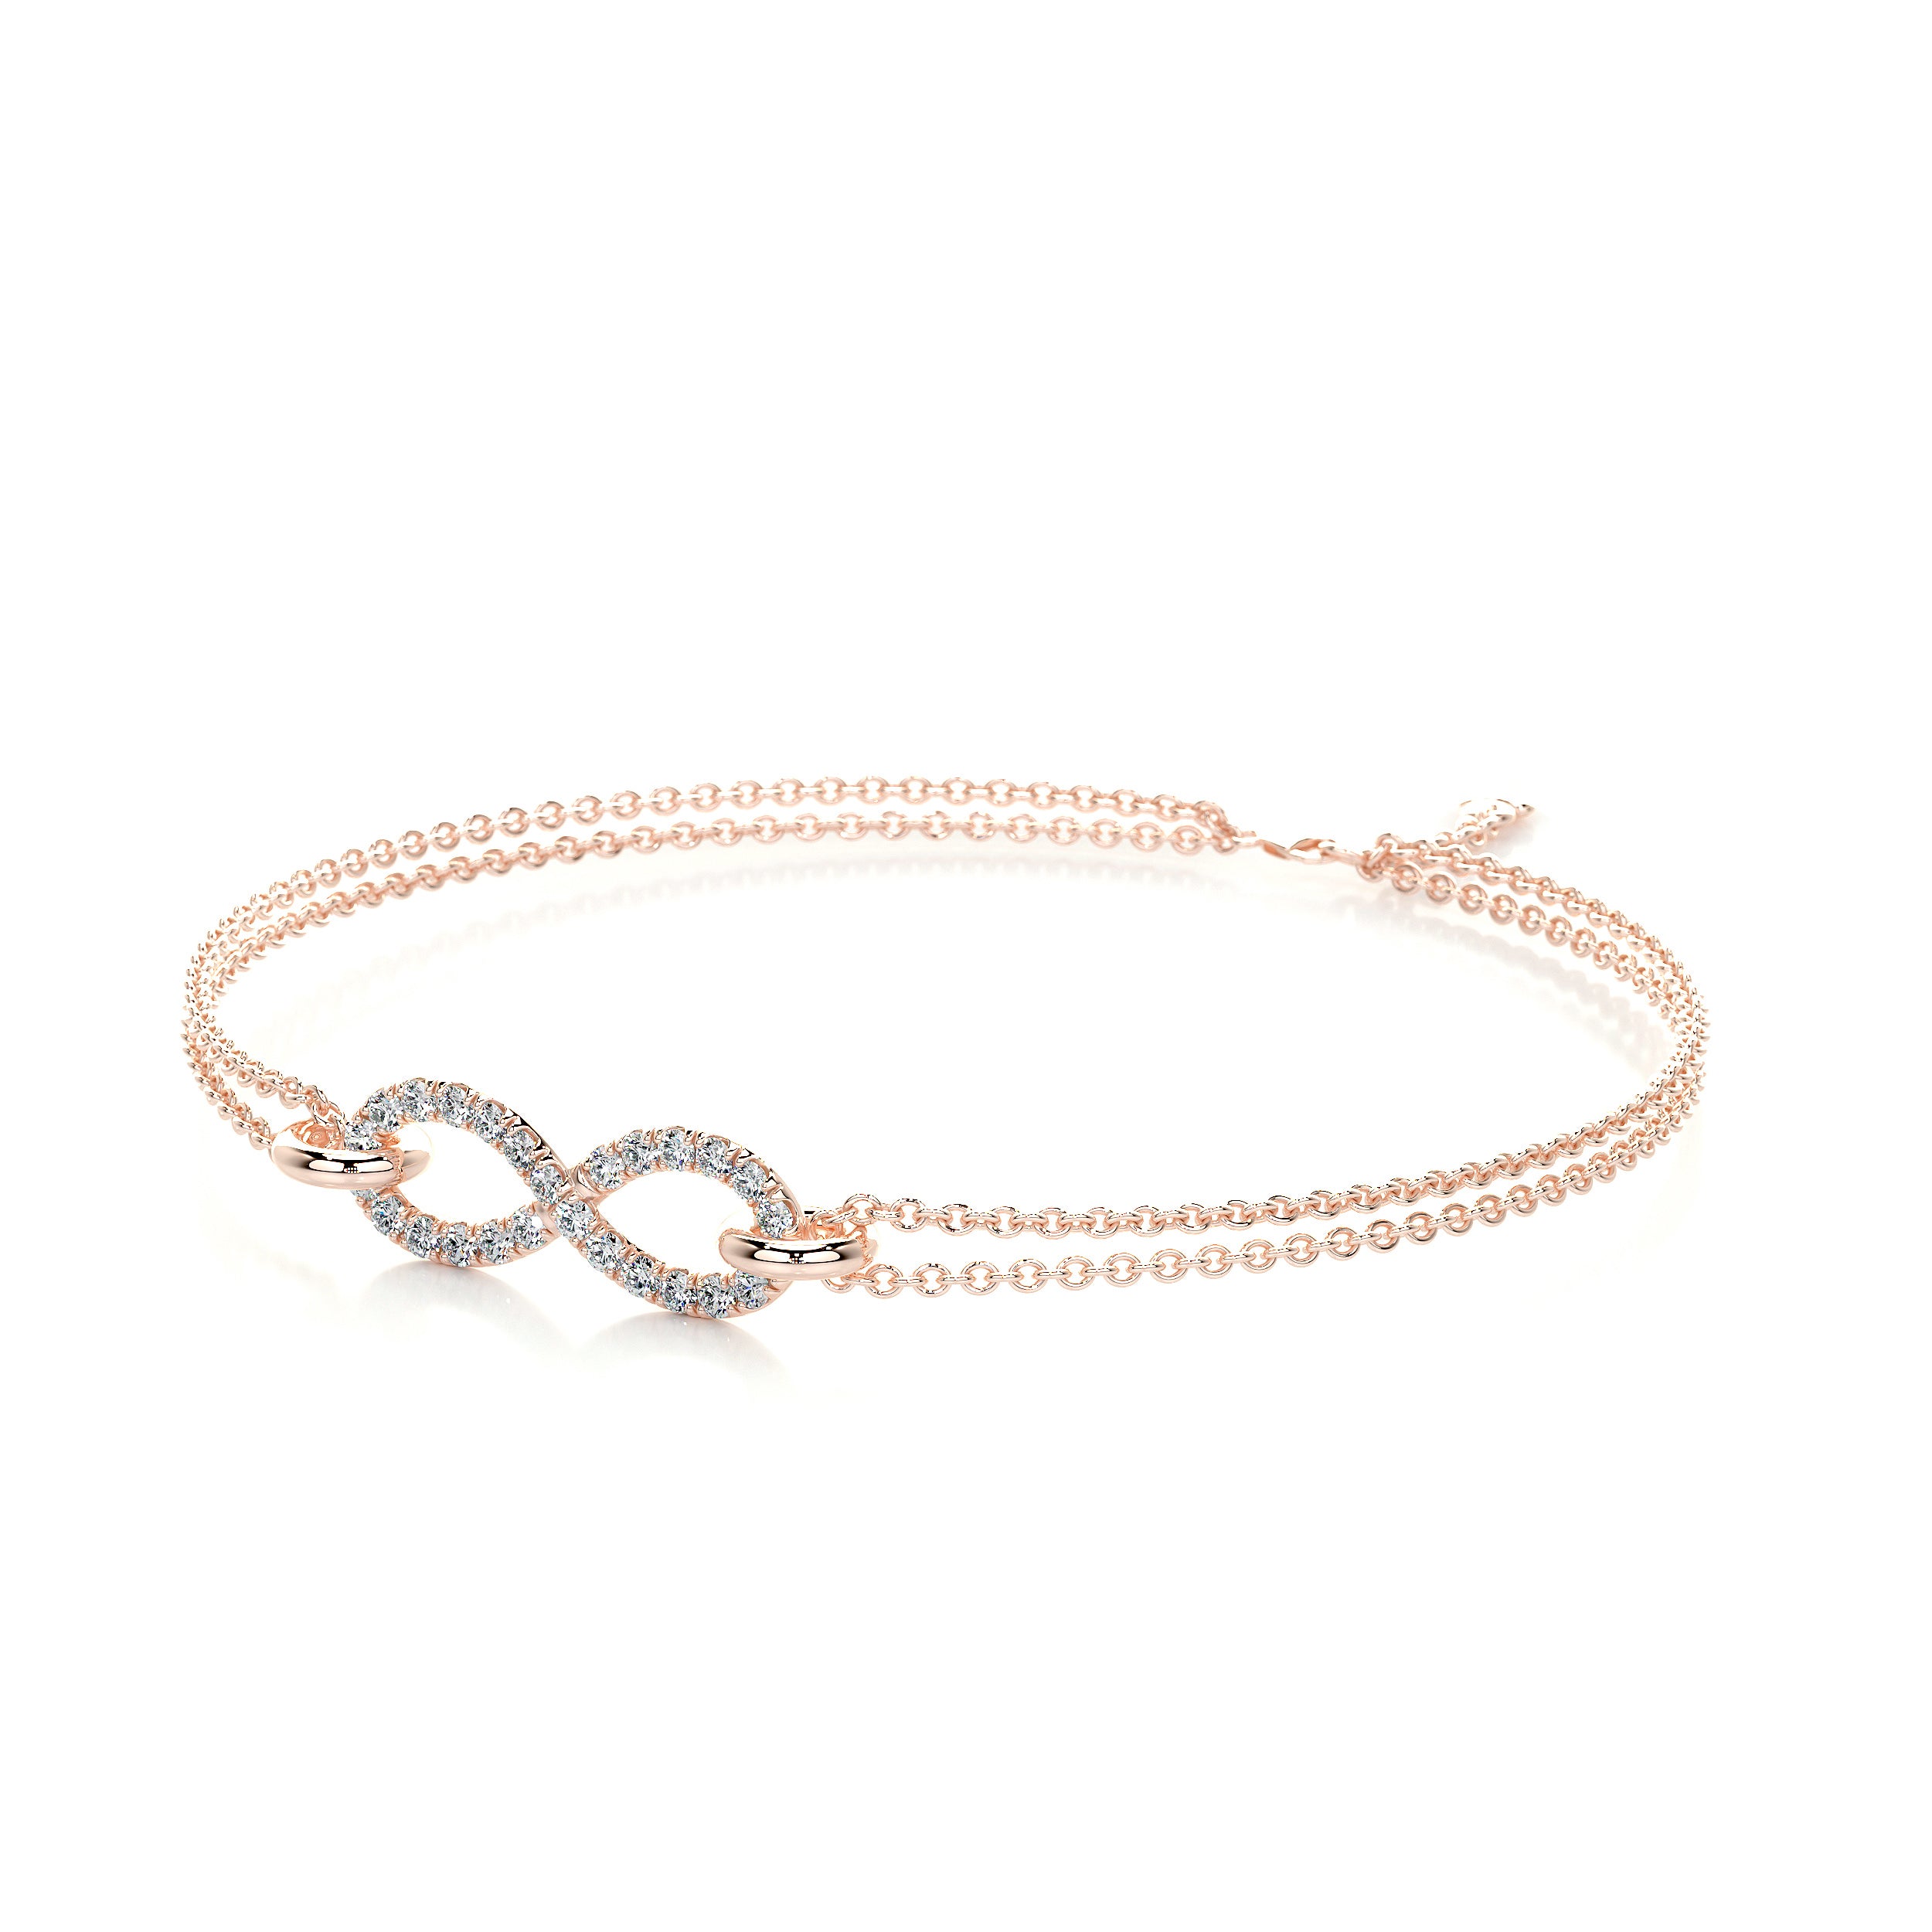 Debbie Diamonds Bracelet   (0.25 Carat) -14K Rose Gold